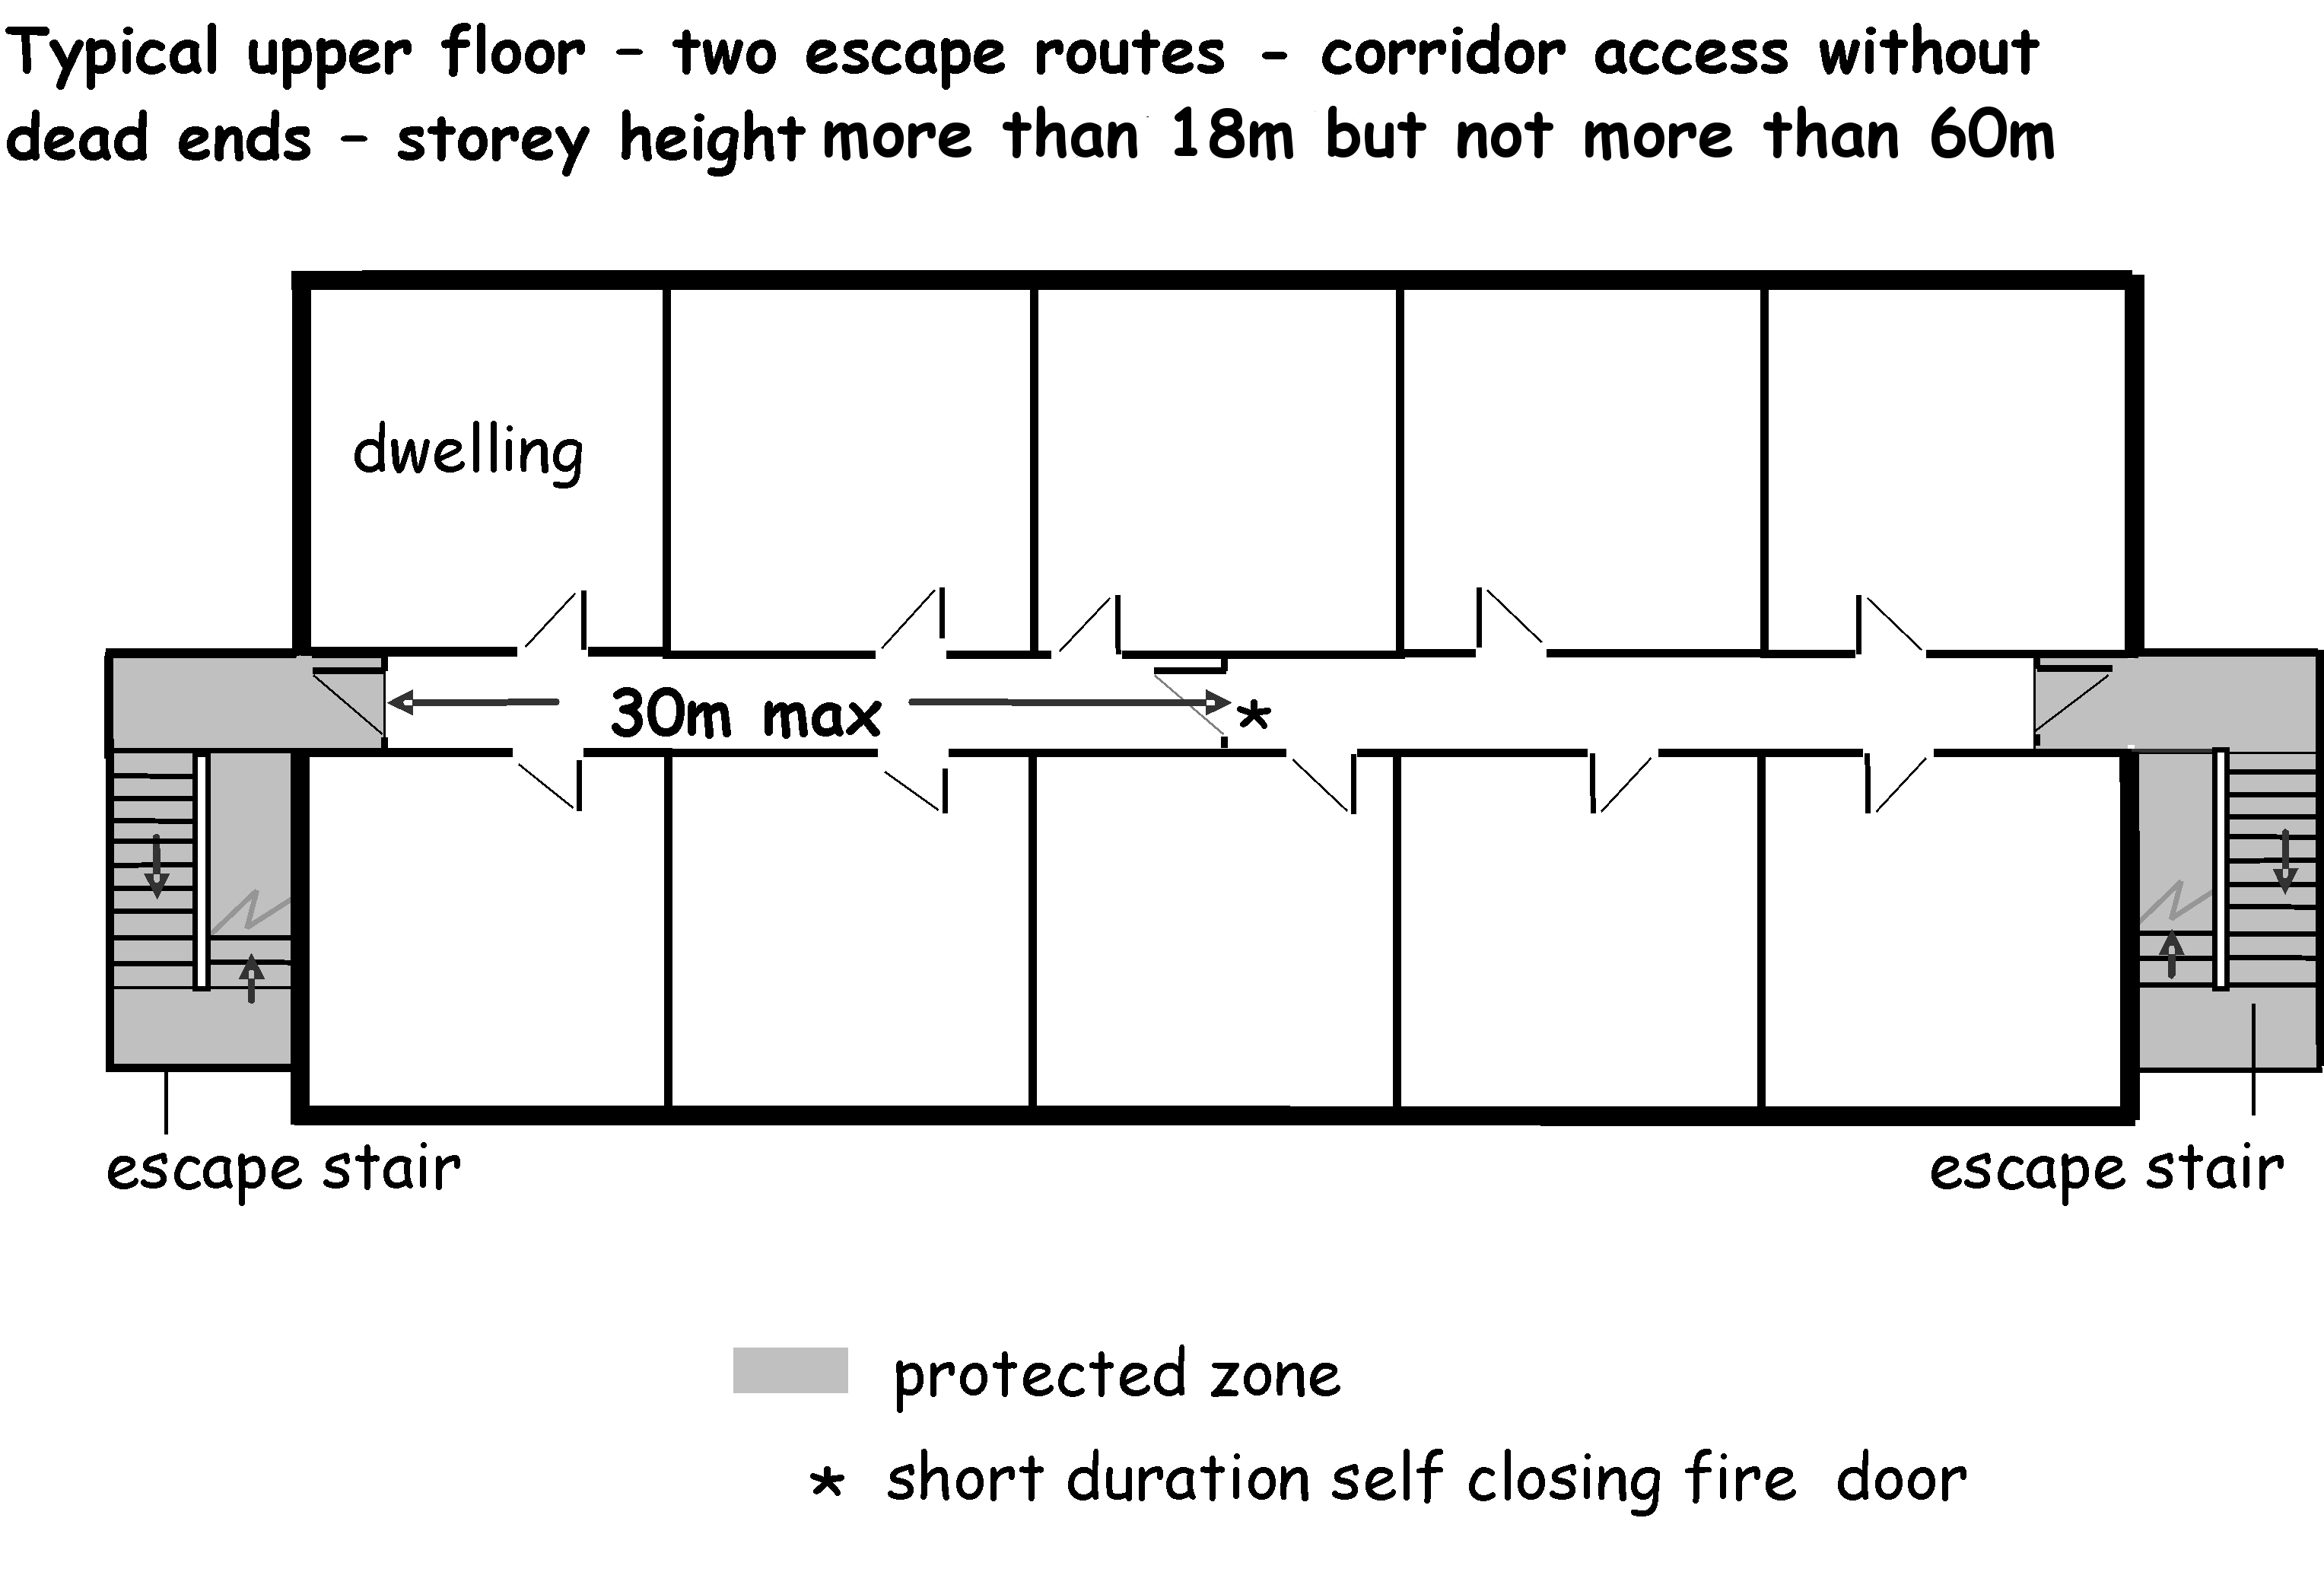 Upper Floor - Two Escape Routes